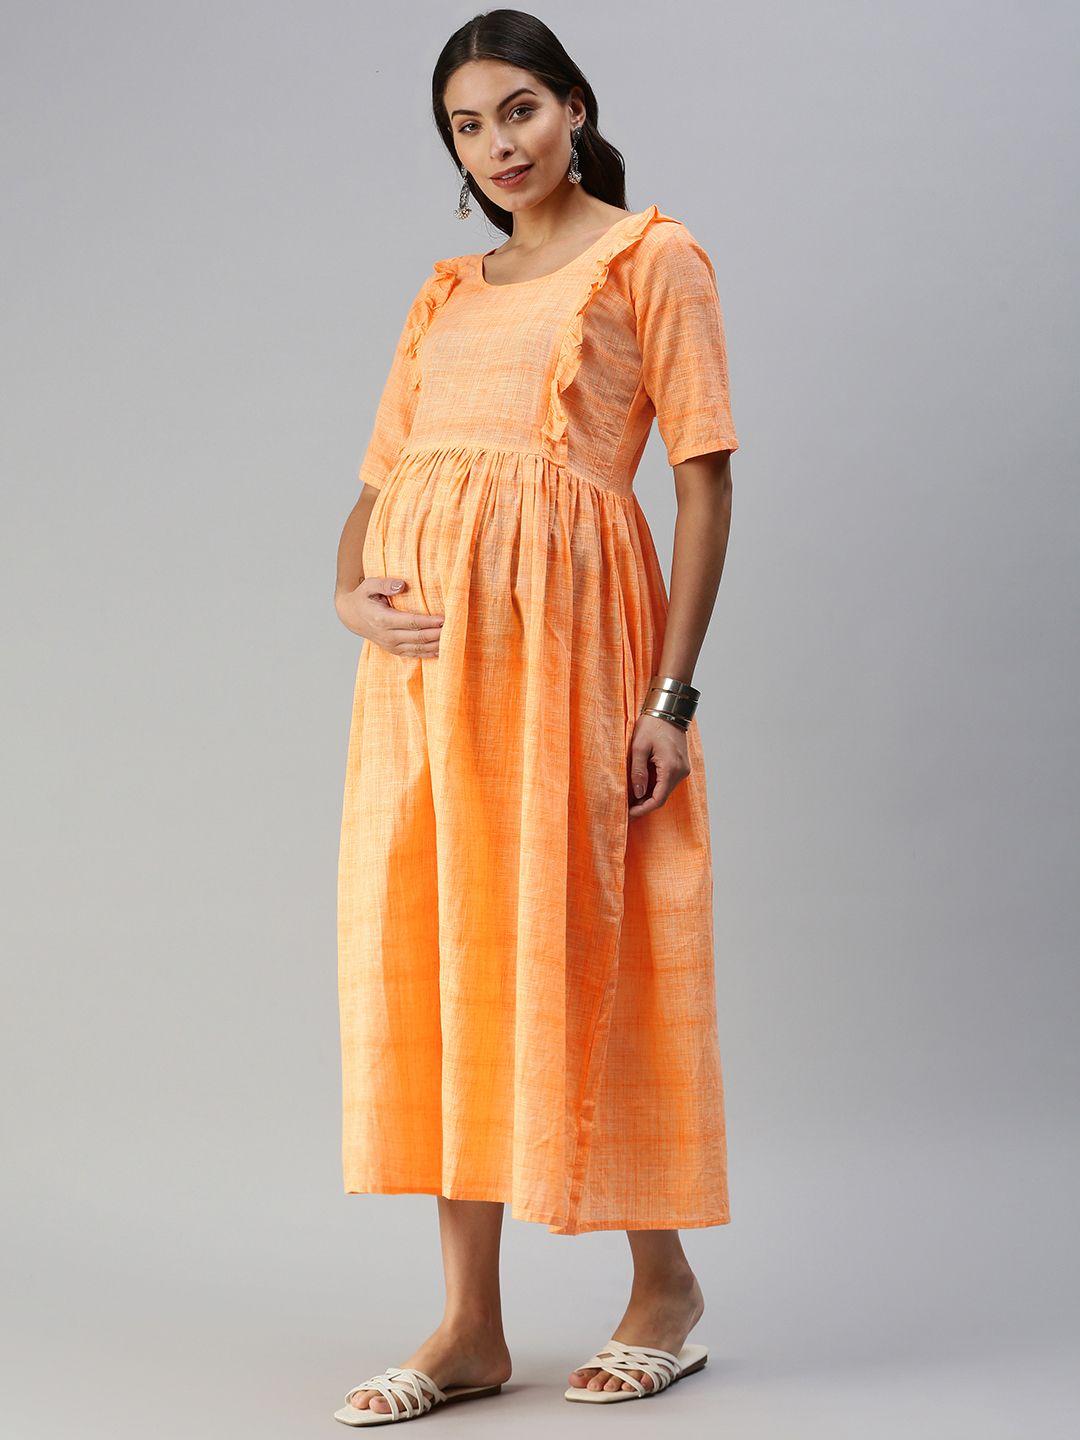 swishchick coral orange woven design handloom maternity a-line midi dress